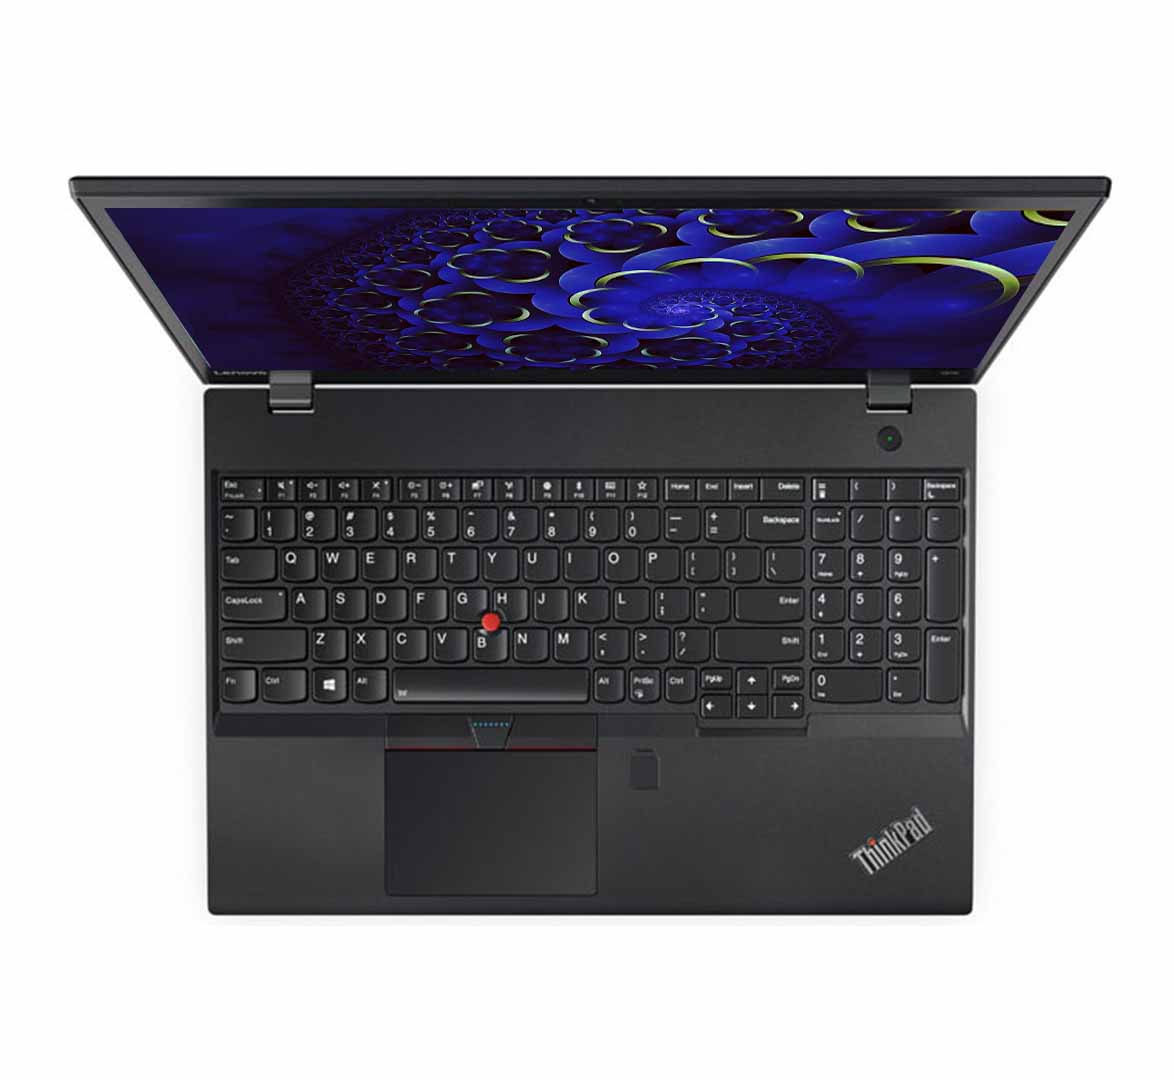 Lenovo ThinkPad T570 Business Laptop, Intel Core i7-7th Gen CPU, 16GB RAM, 512GB SSD, 15 inch Display, Windows 10 Pro